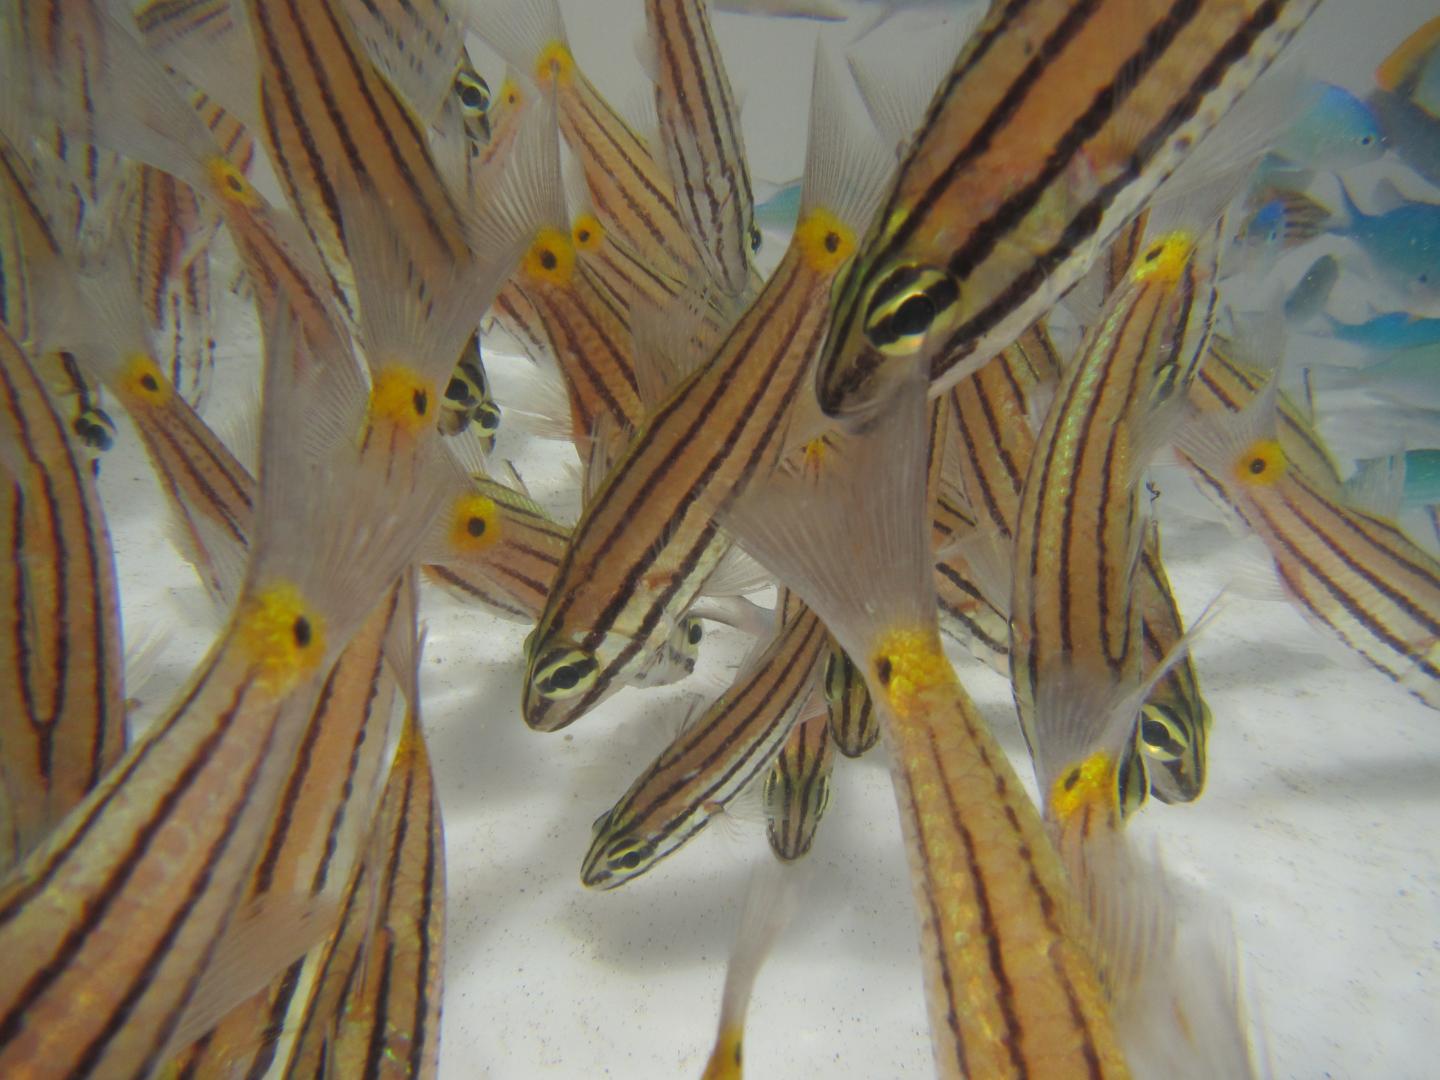 Five Lined Cardinalfish